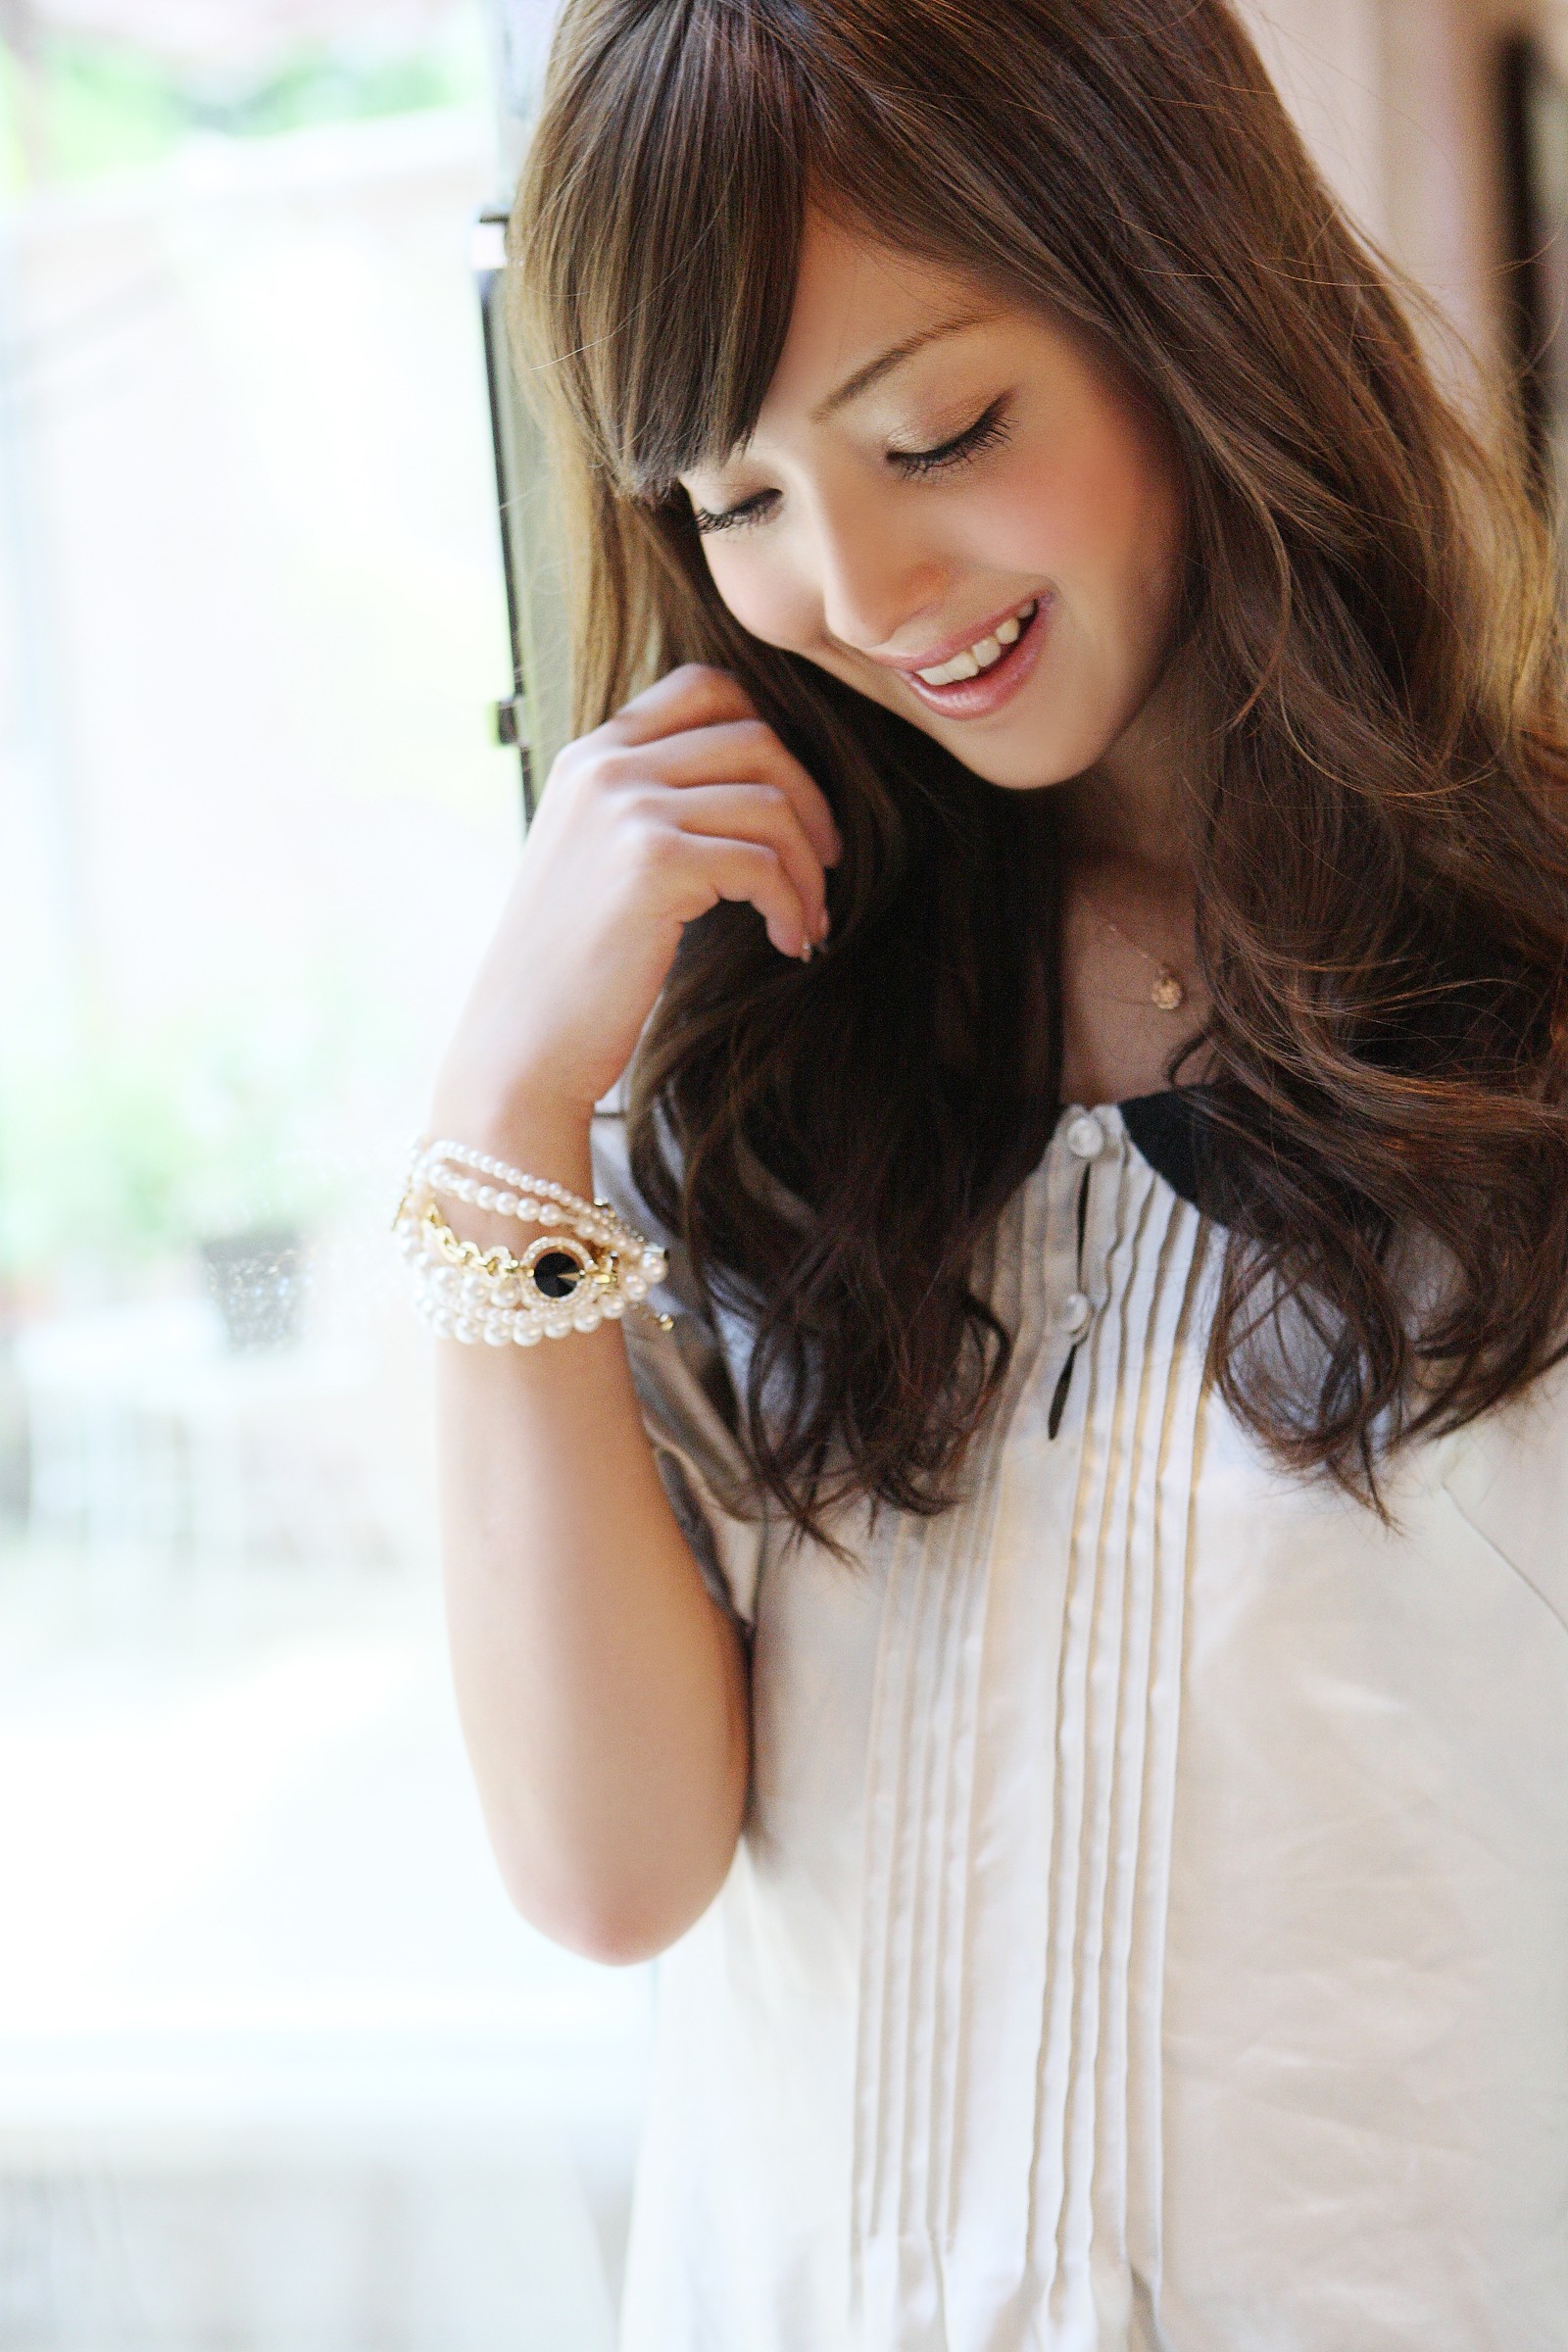 Sasaki Nozomi Model Asian Smiling White White Clothing Brunette Women Japanese 1600x2400